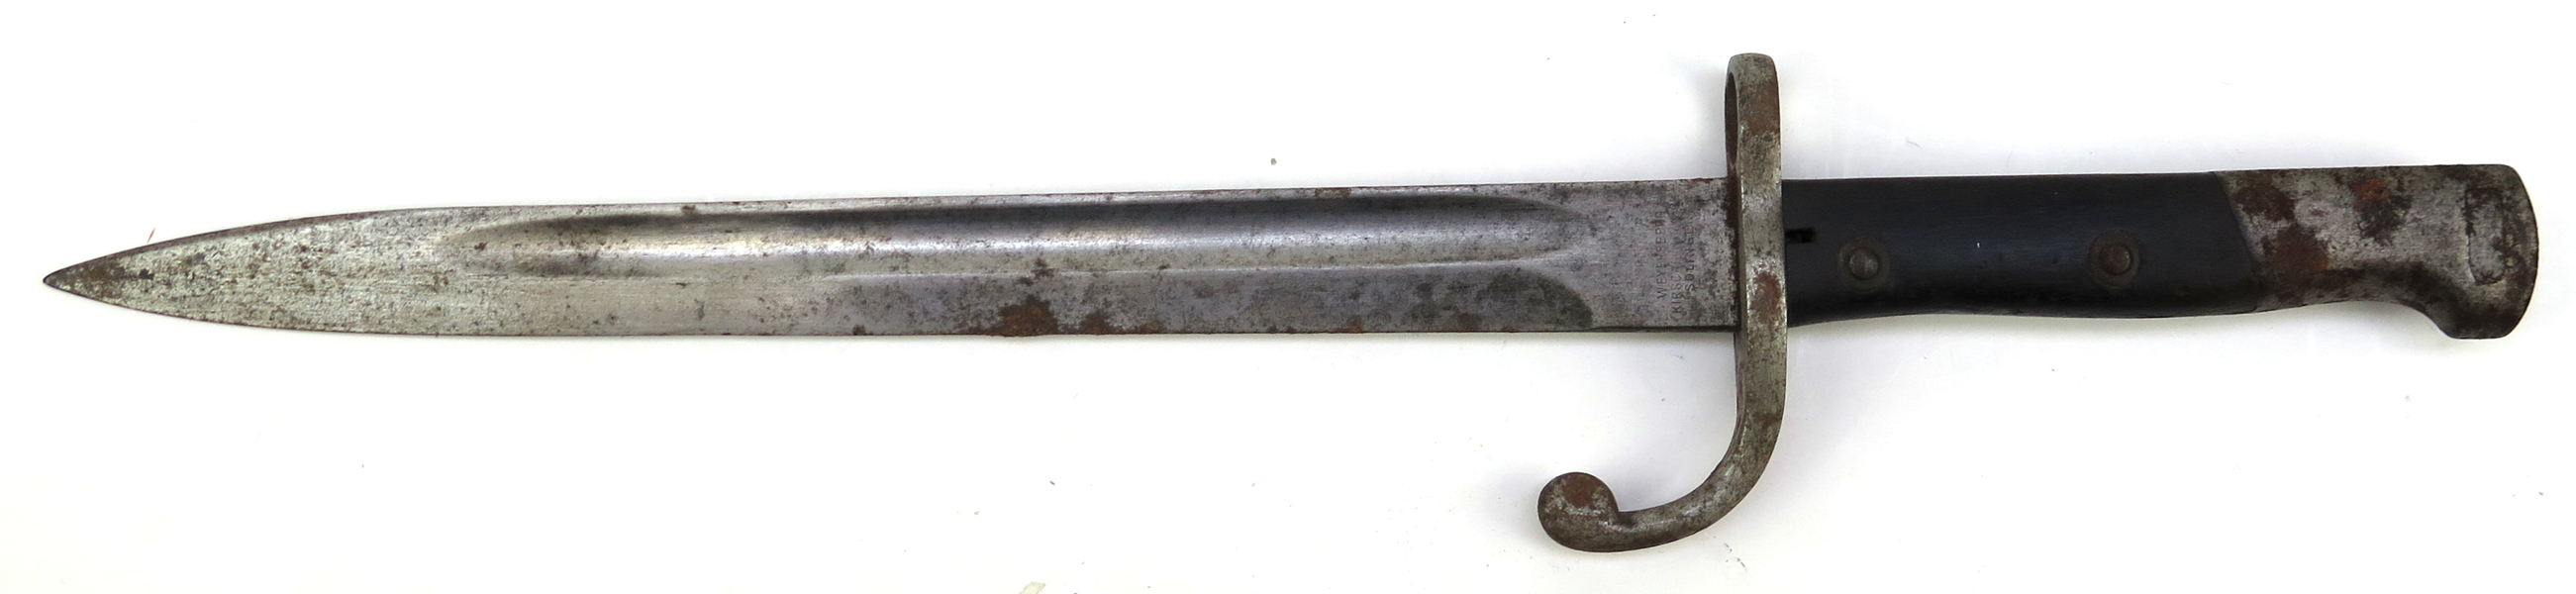 Bajonett för Mauser M/1908, stämplad Weyersberg, Kirschbaum & Co, Solingen_23121a_8dab0f089300b06_lg.jpeg